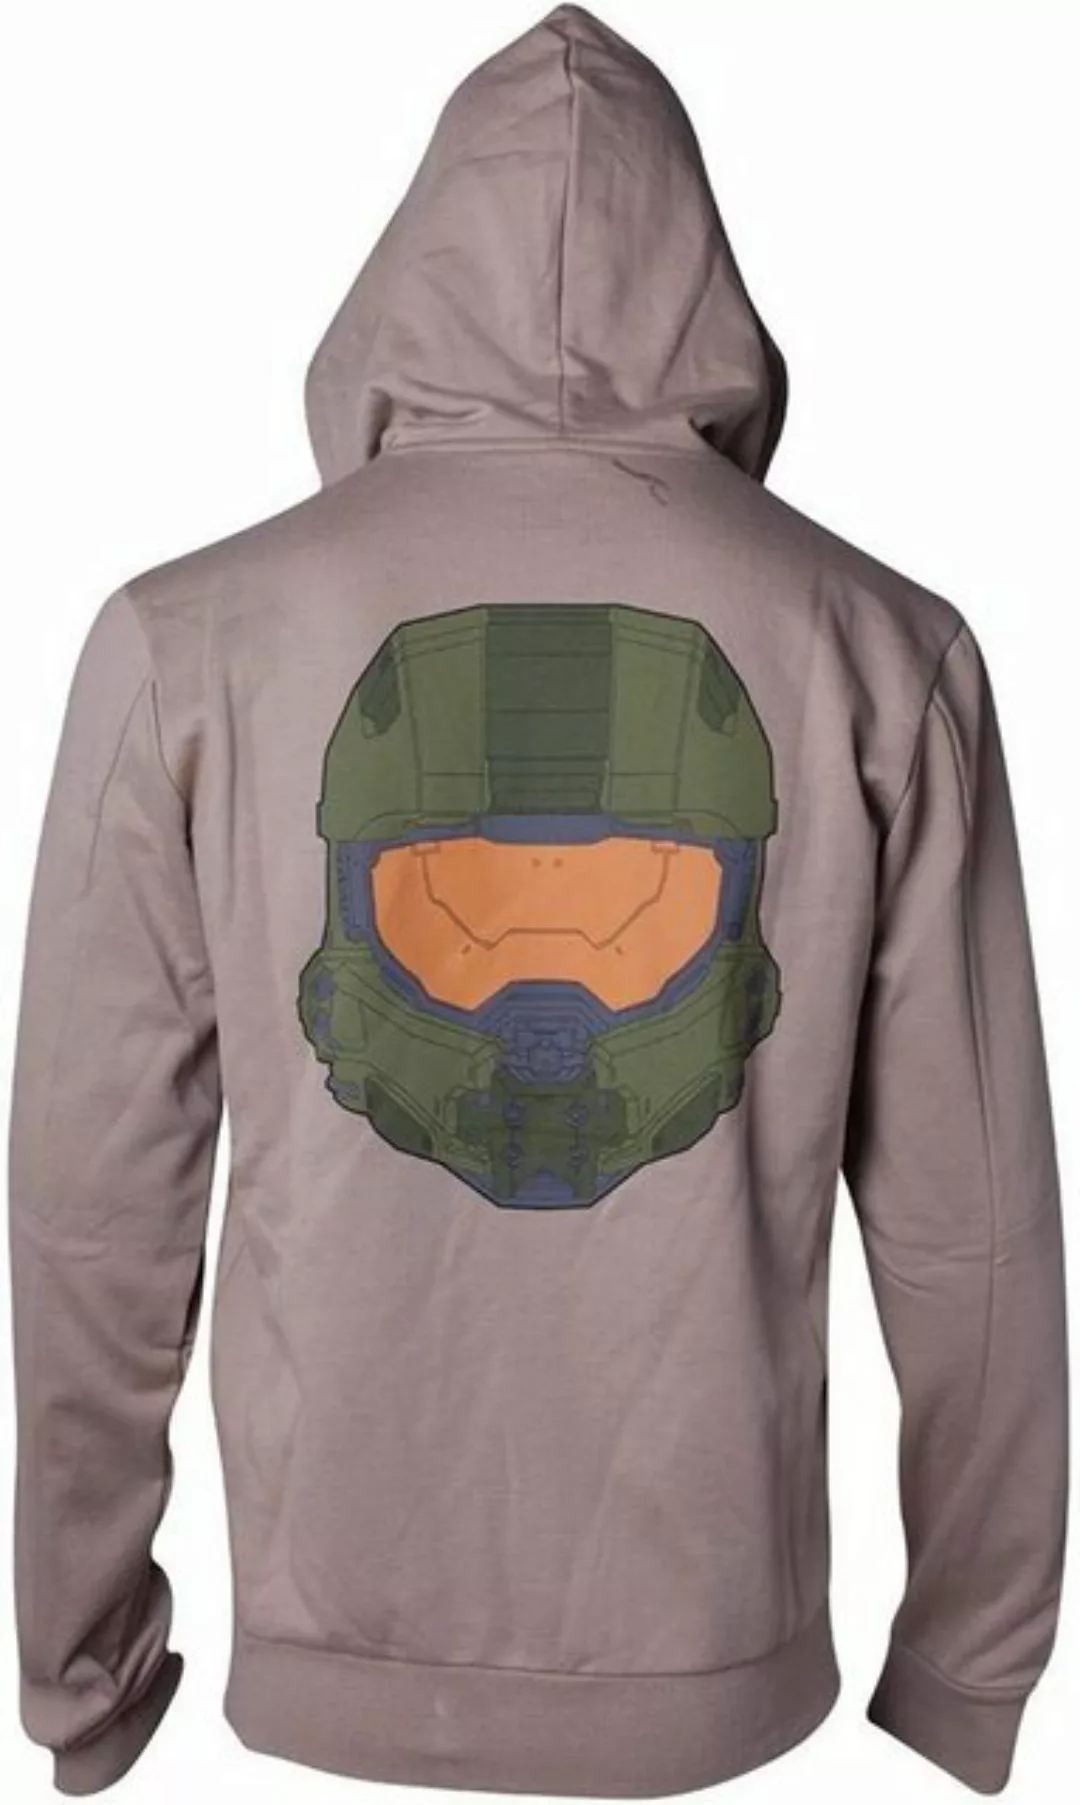 Halo Hoodie Halo Sweatshirt Masterchief Helmet Hoodie Sweatshirt mit Kapuze günstig online kaufen